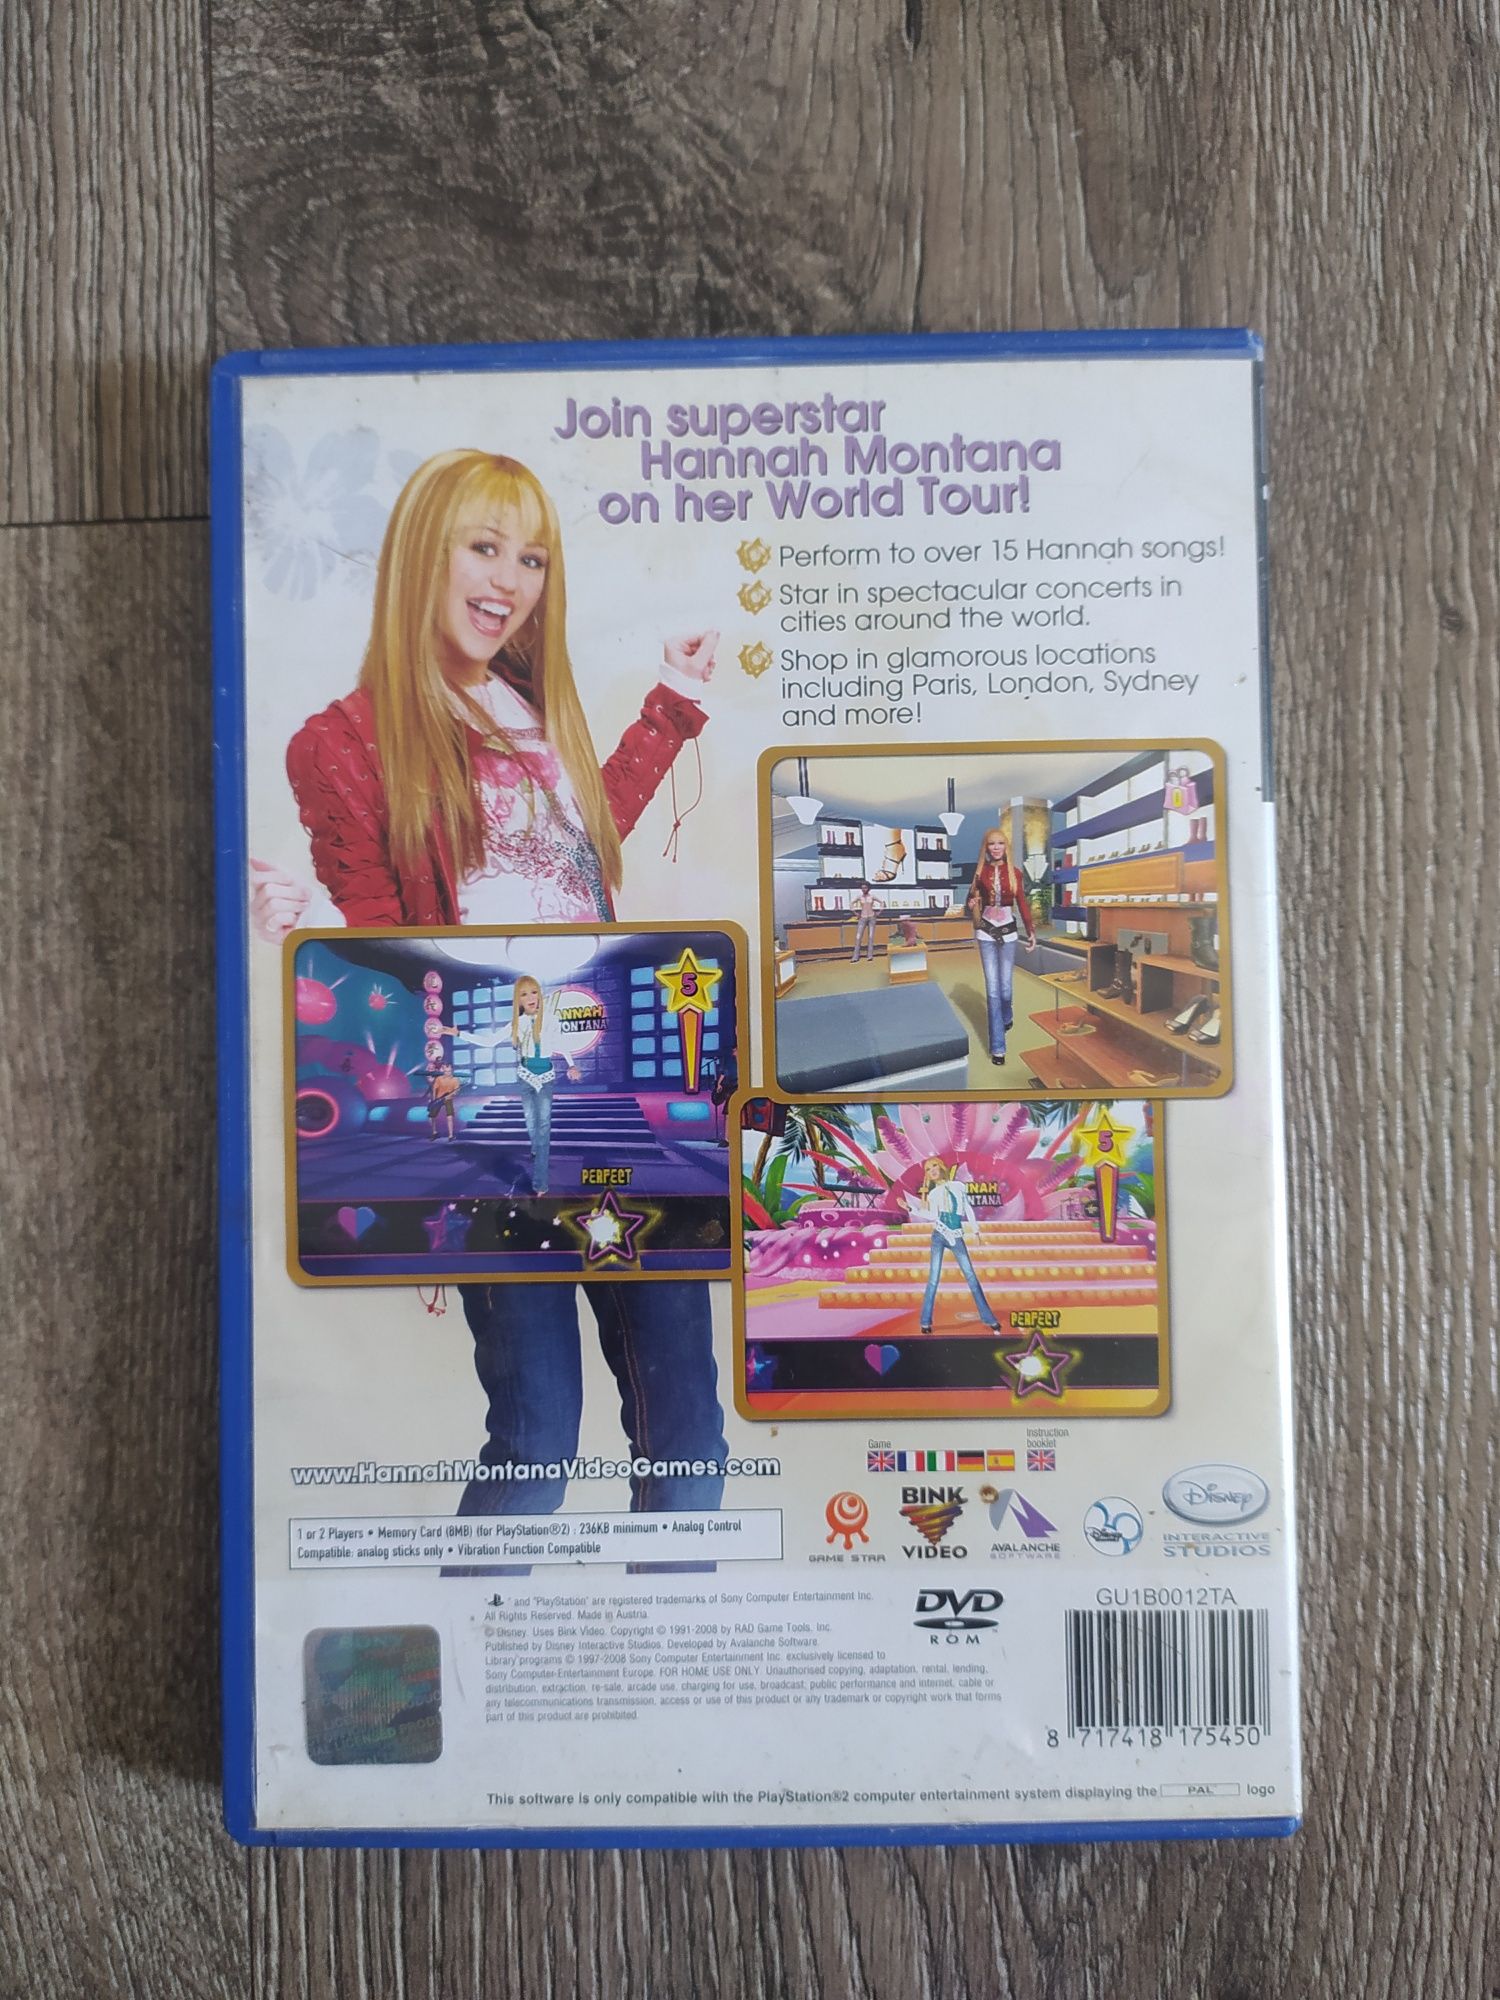 Gra PS2 Disney Hannah Montana Wysyłka